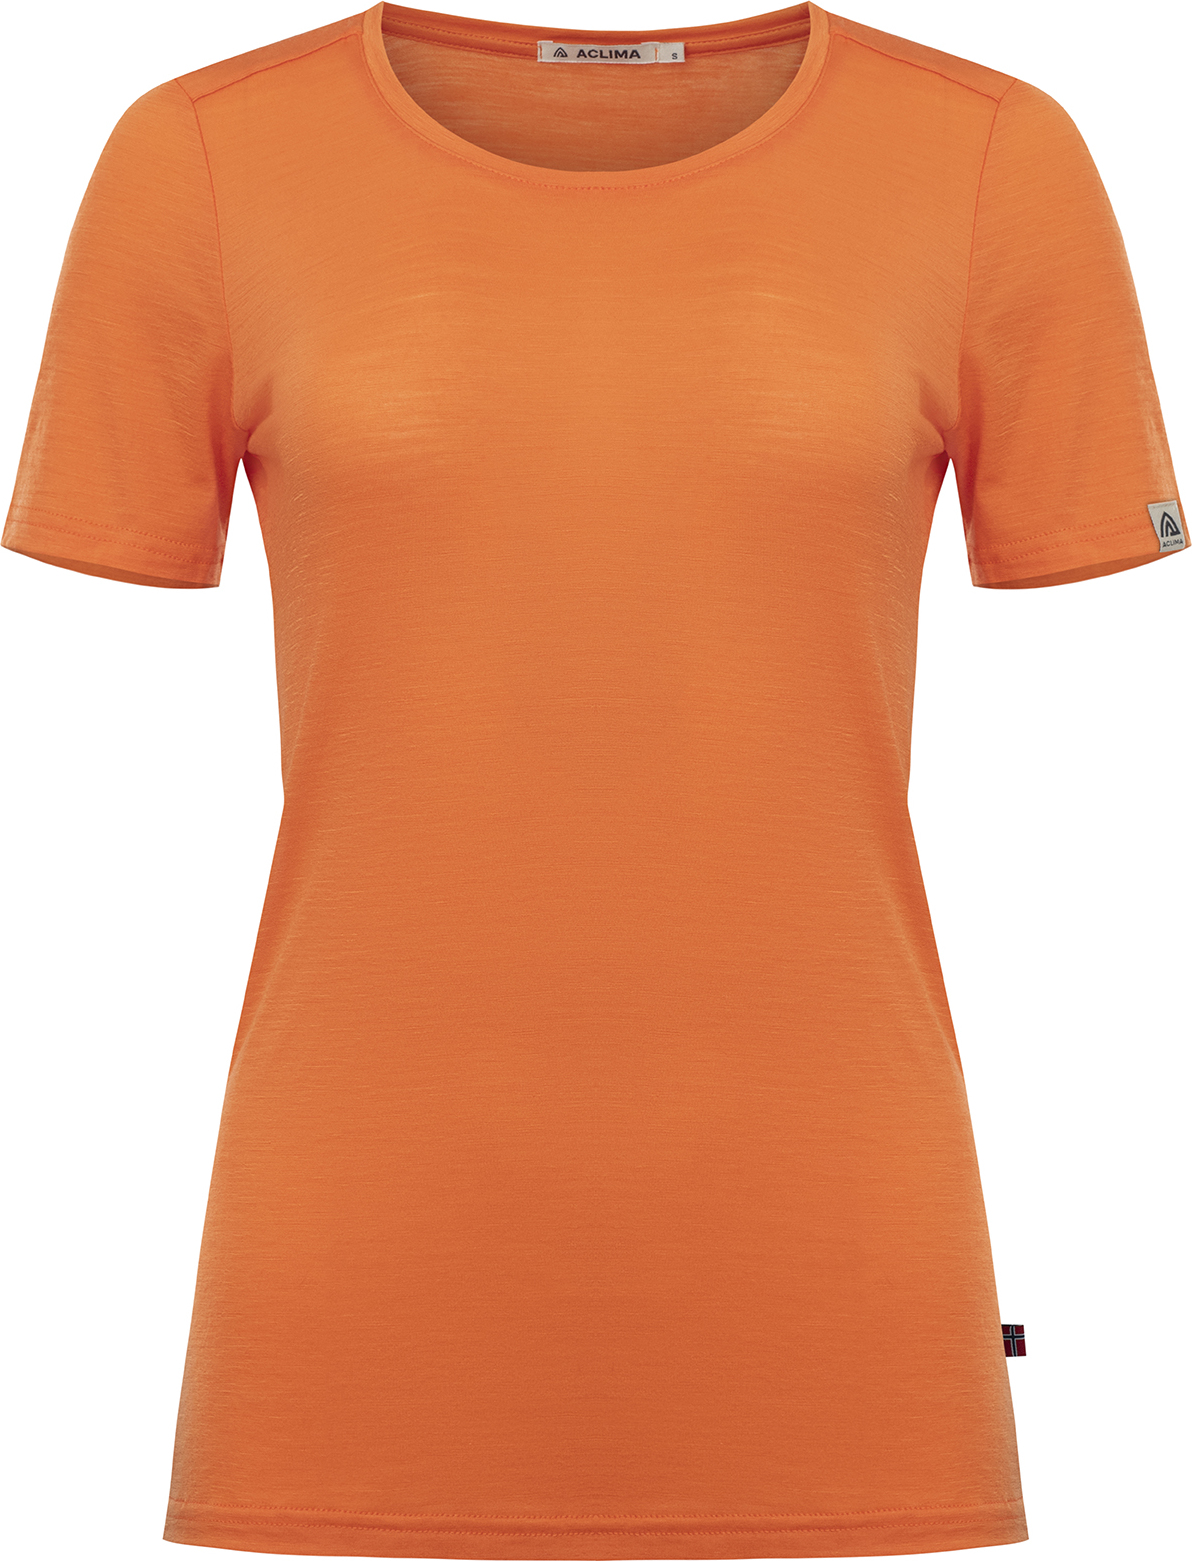 Aclima Women’s LightWool 140 T-shirt Orange Tiger